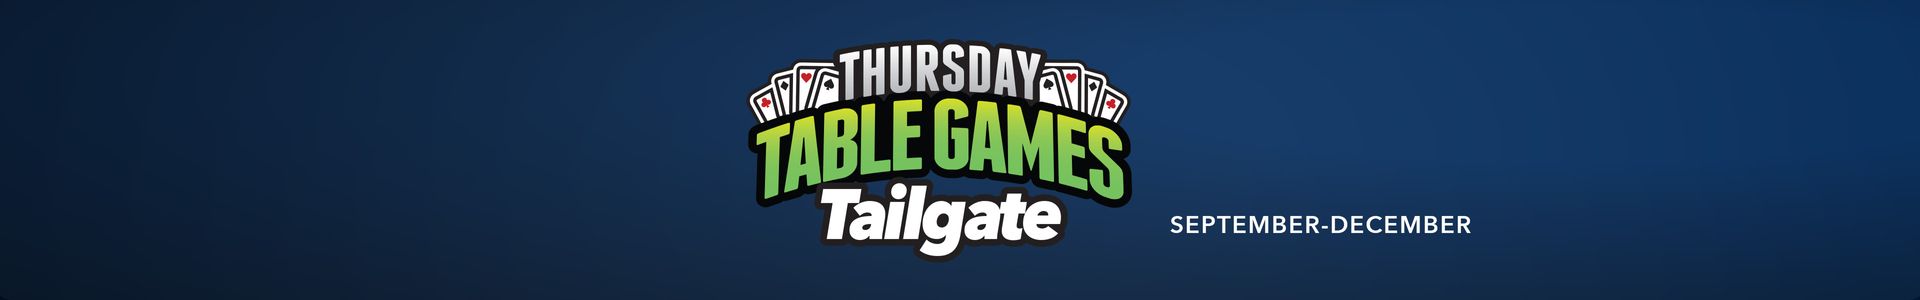 Thursday Table Games Tailgate